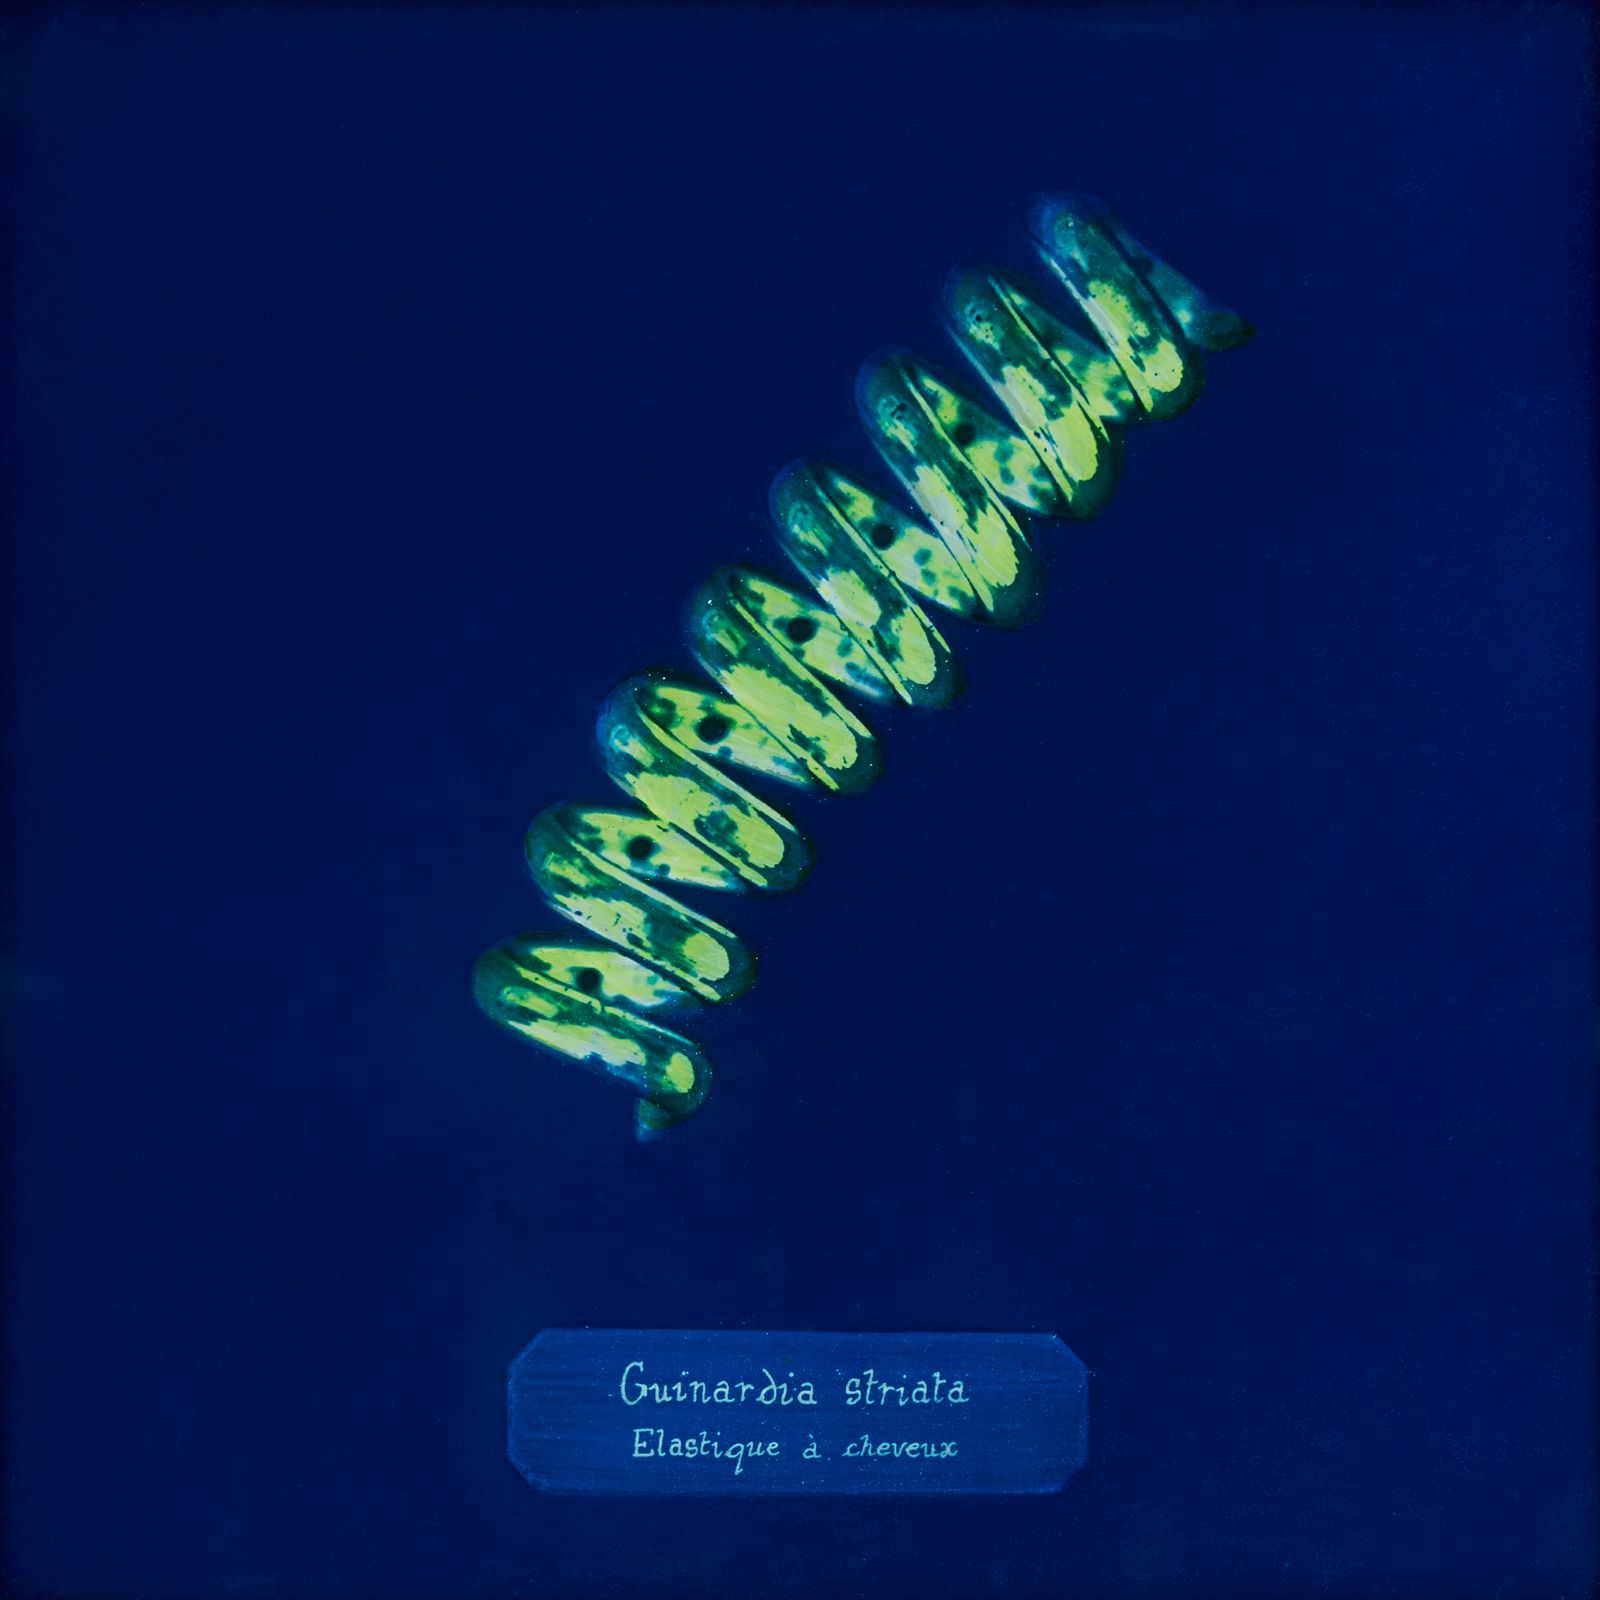 © Manon Lanjouère - Guinardia striata, Hair elastic, Cyanotype on glass and fluorescent vynil emulsion, 20x20 cm